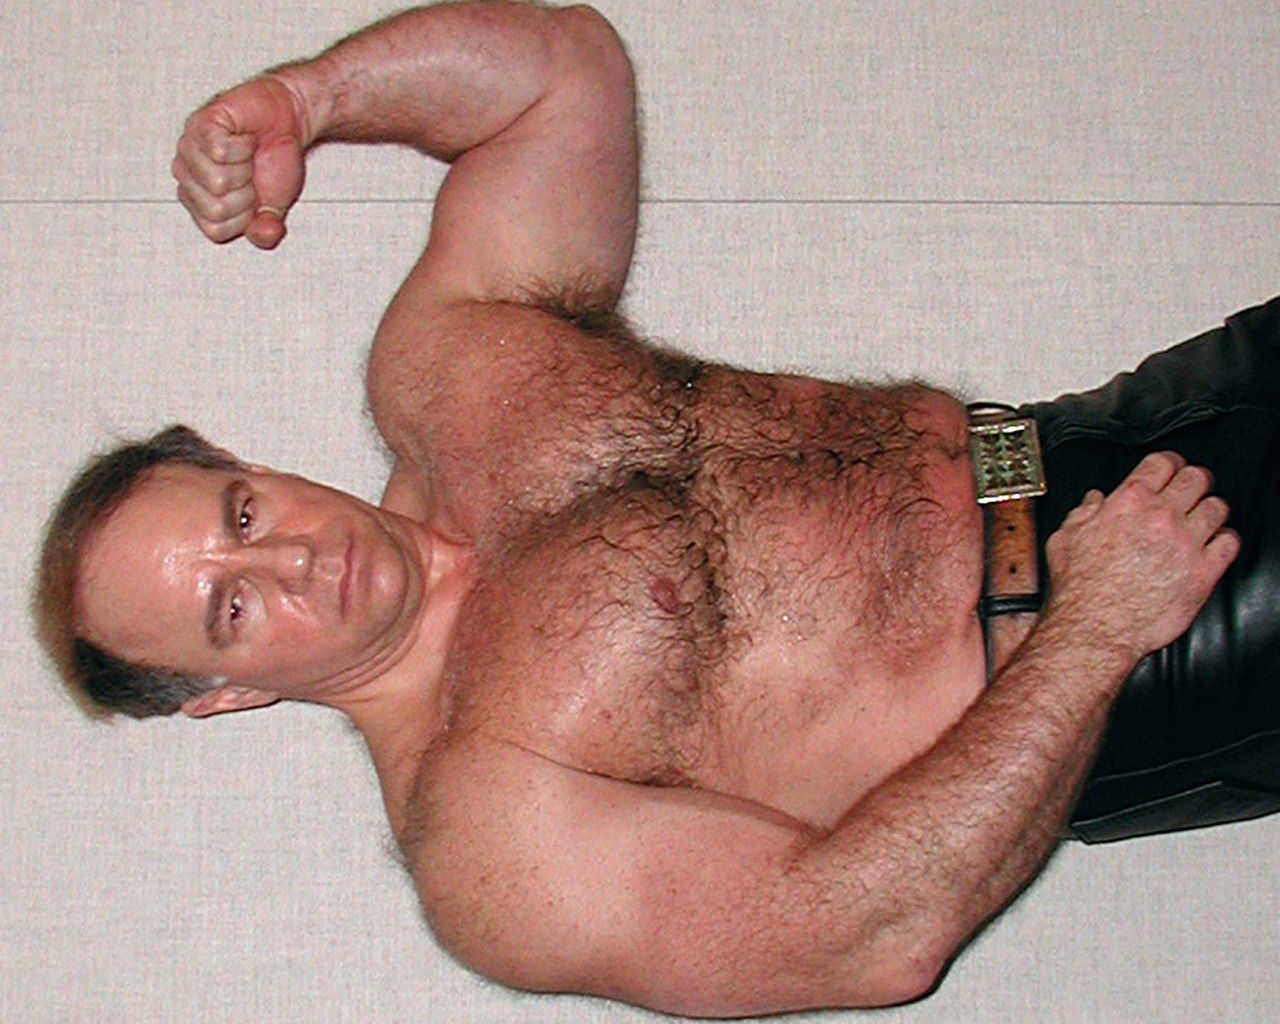 Watch the Photo by Hairy Musclebears with the username @hairymusclebears, posted on August 19, 2019 and the text says 'Hairy Strong Wrestler Man from GLOBALFIGHT.com personals #gay #chubbygay #chubbybear #bearchubby #stockybears #thebearmag #instabears #instabear #ursos #gaygram #bearwww #chunkyguys #GayBear #beargay #gayireland #bearstyle #Hairybear #picsbybears..'